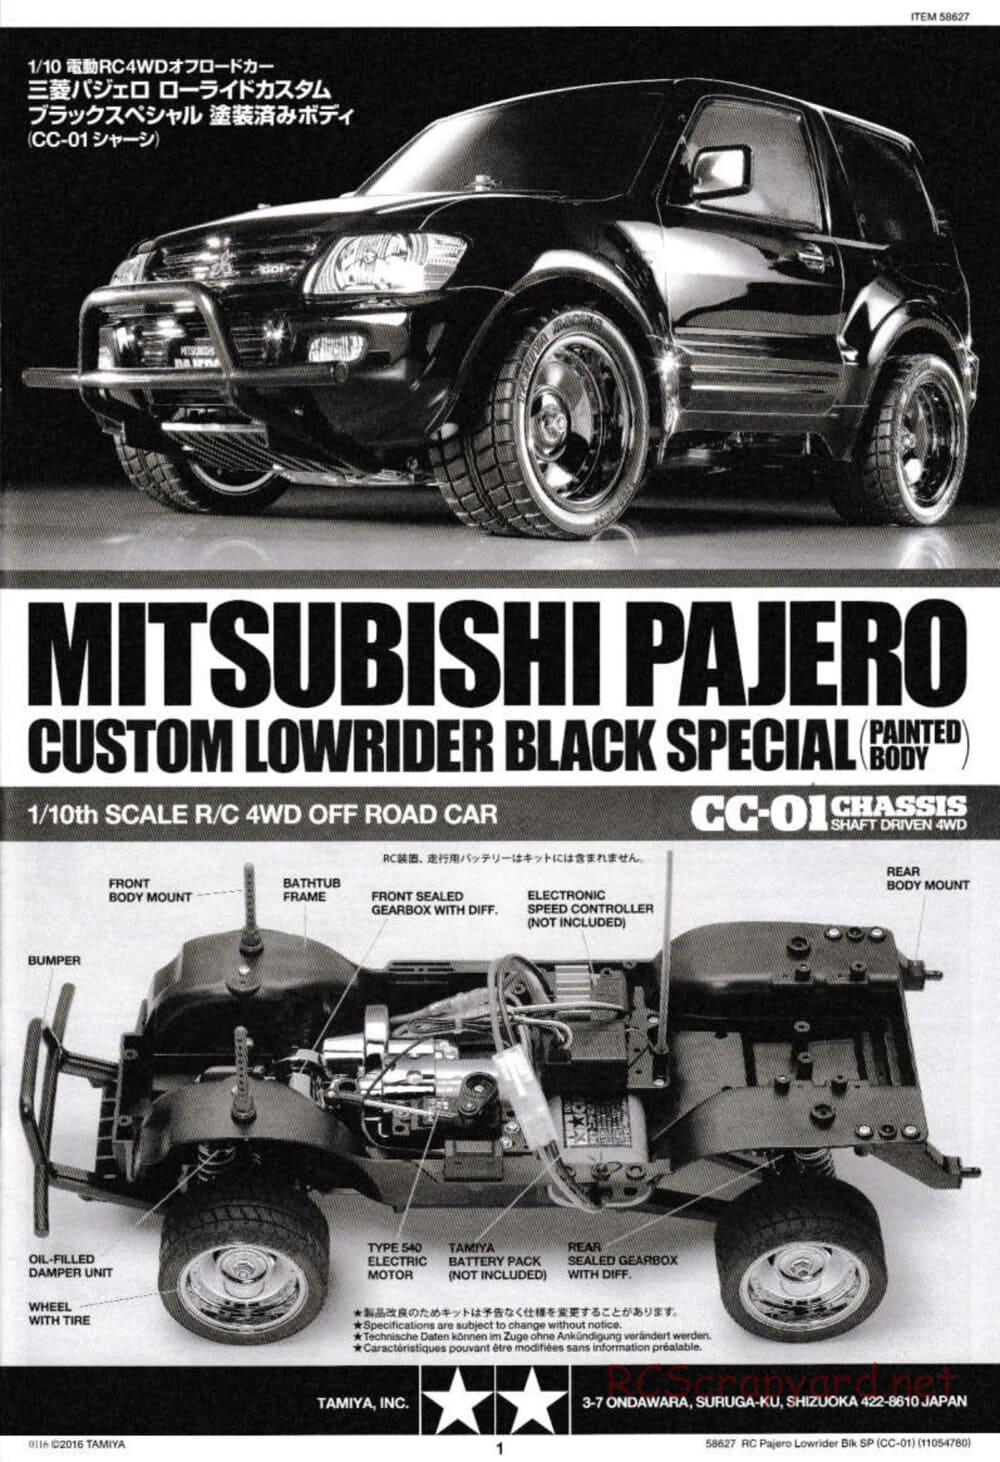 Tamiya - Mitsubishi Pajero Custom Lowrider Black Special - CC-01 Chassis - Manual - Page 1